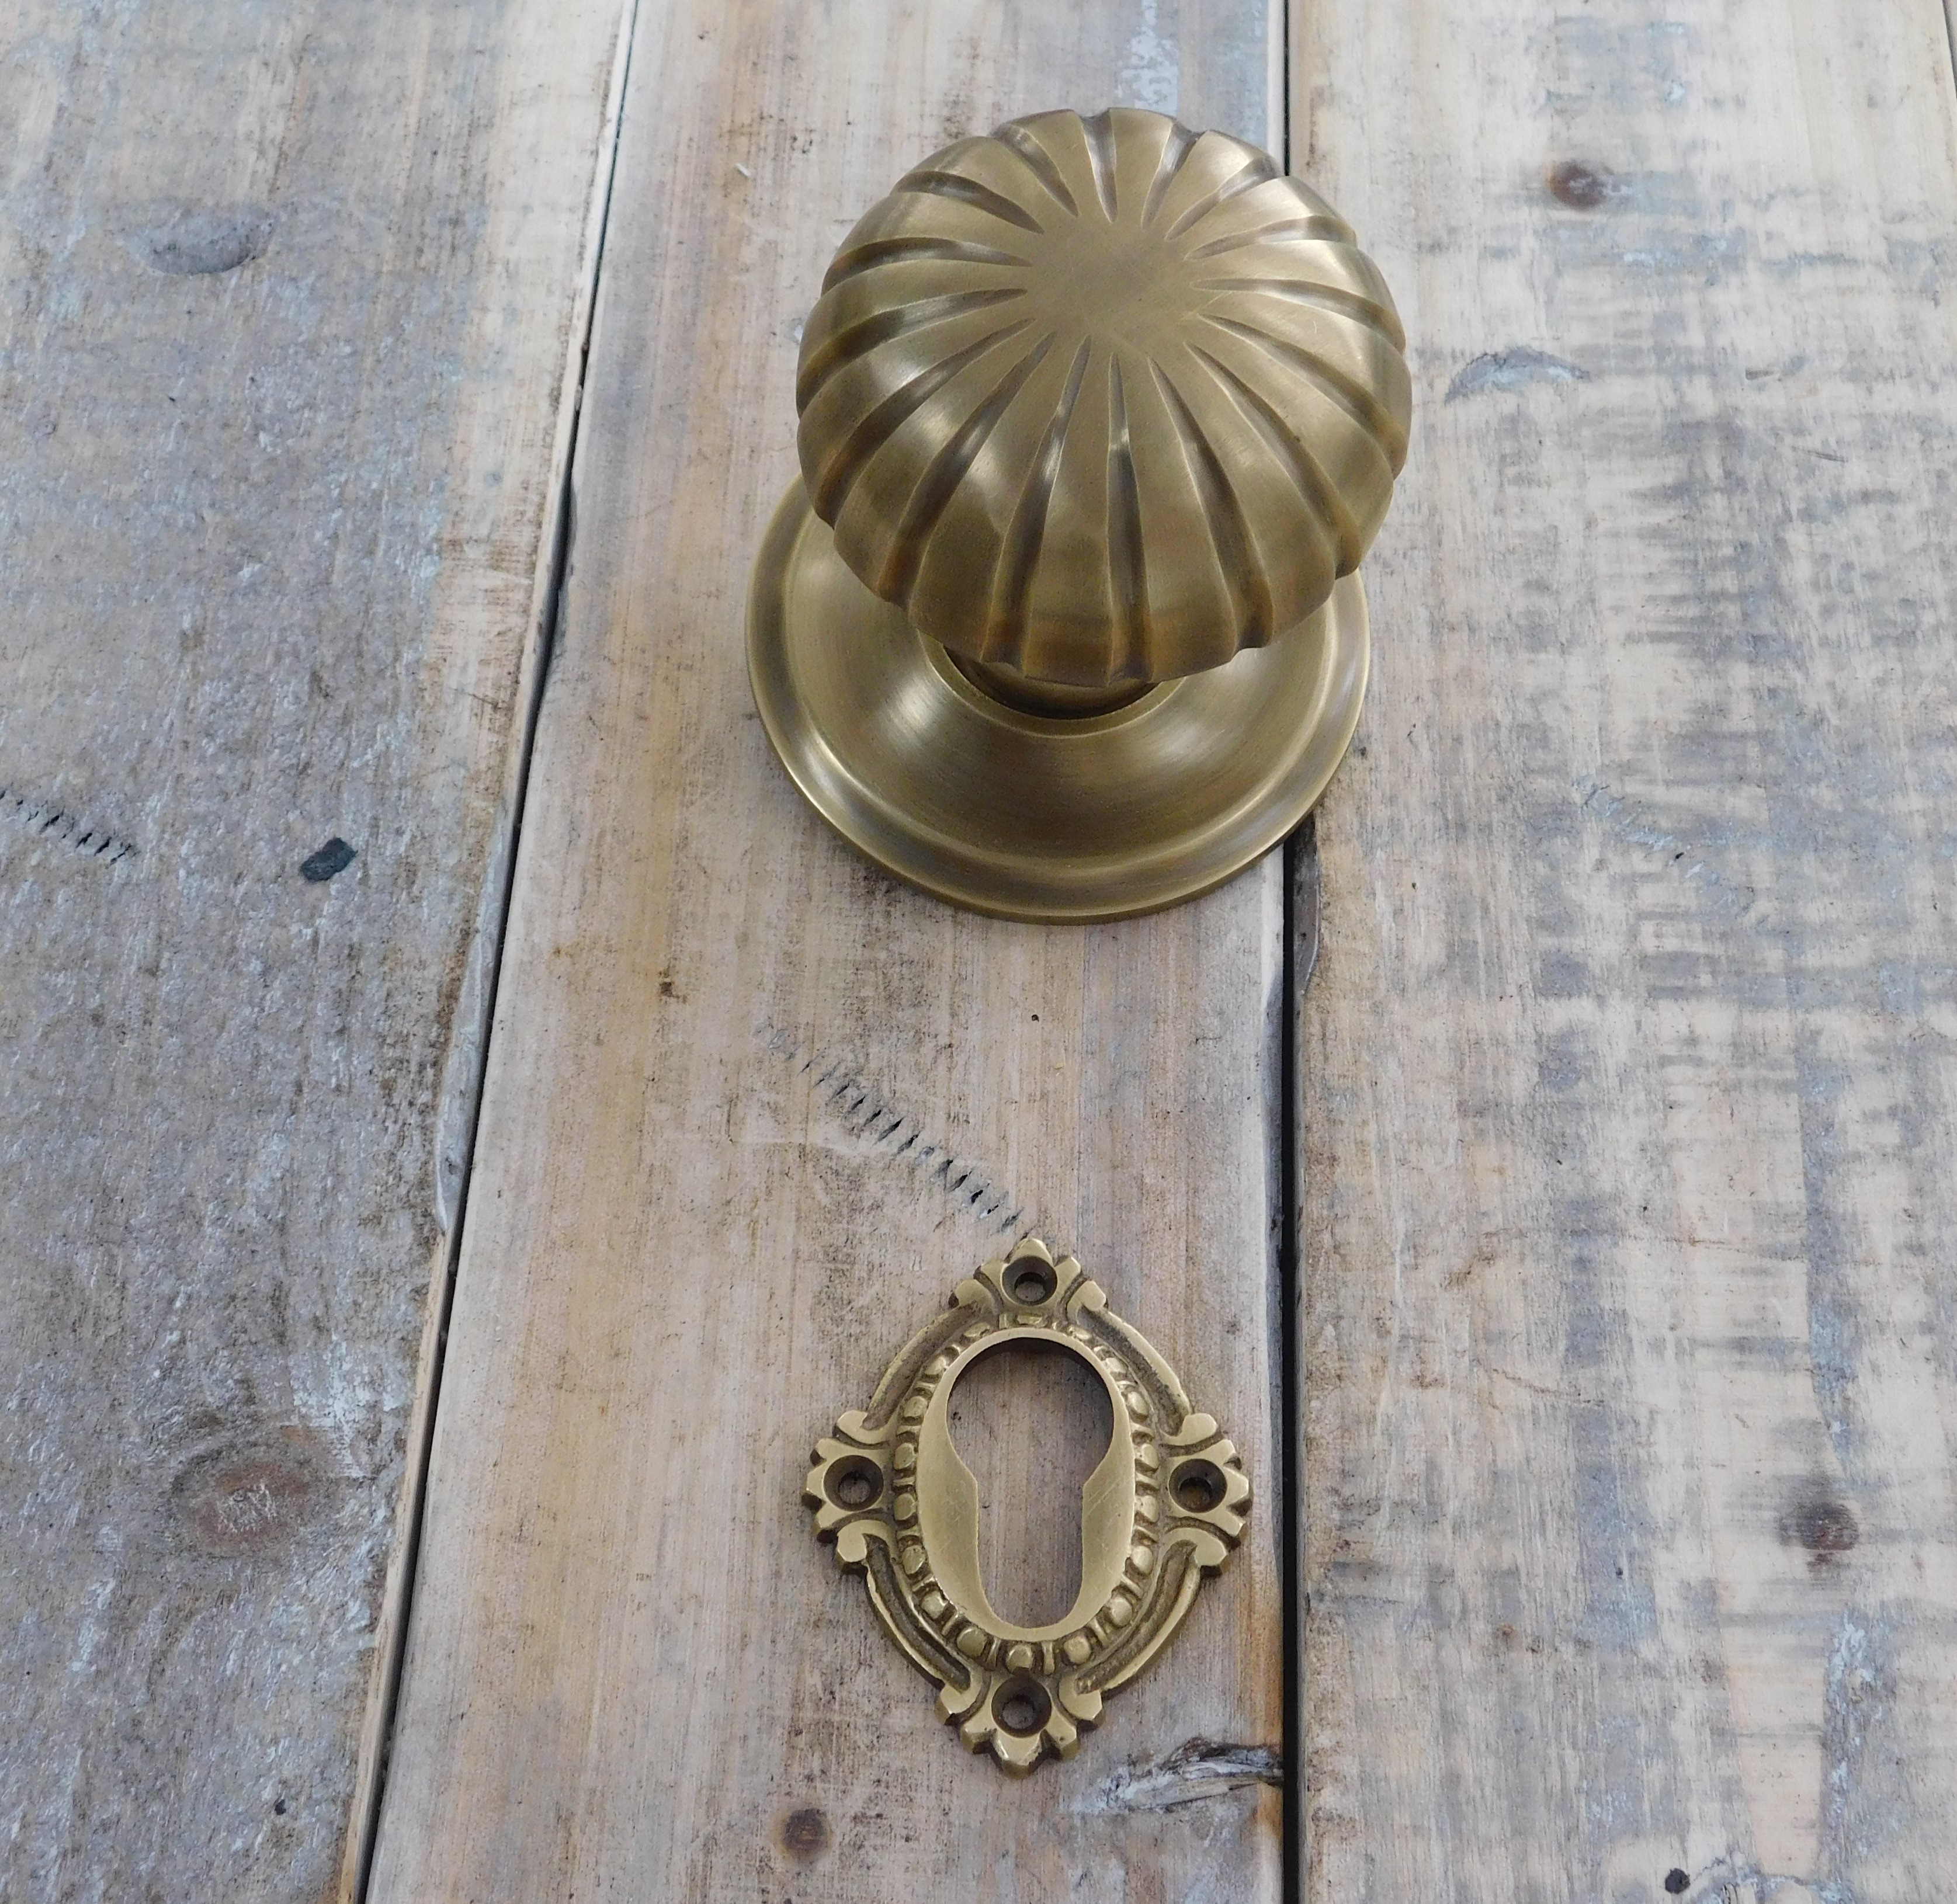 Deurknop met rozet, antiek deurbeslag in messing, met 9 inch lang draadbout en dopmoer - De knop wordt niet gedraaid -